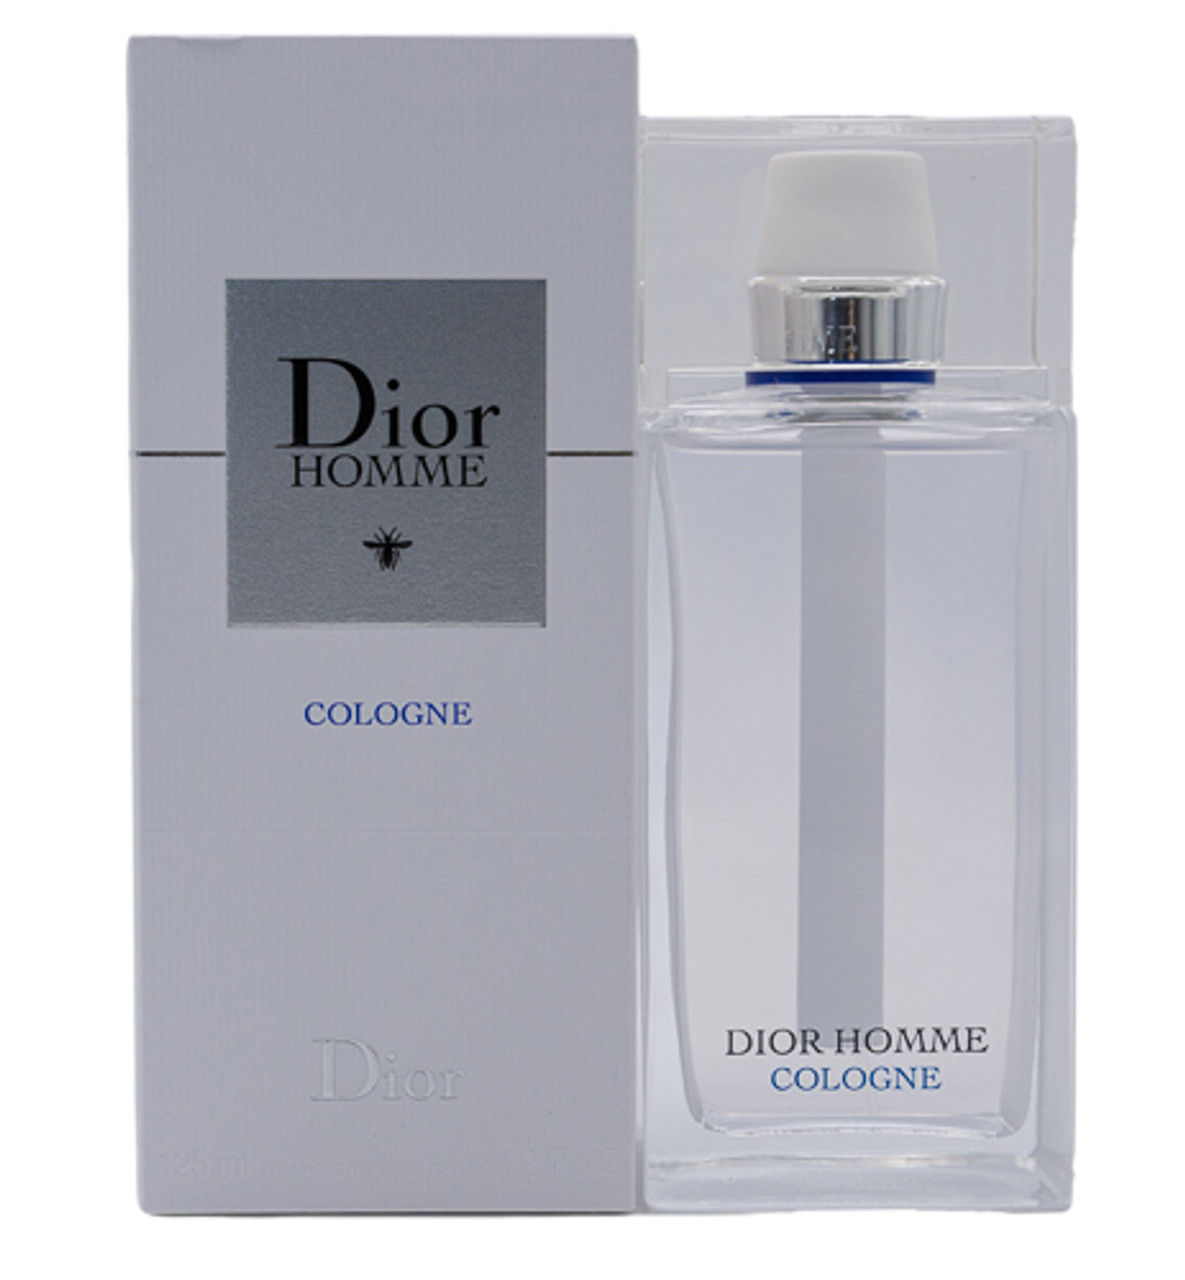 Dior Homme Cologne  Dior  Sephora